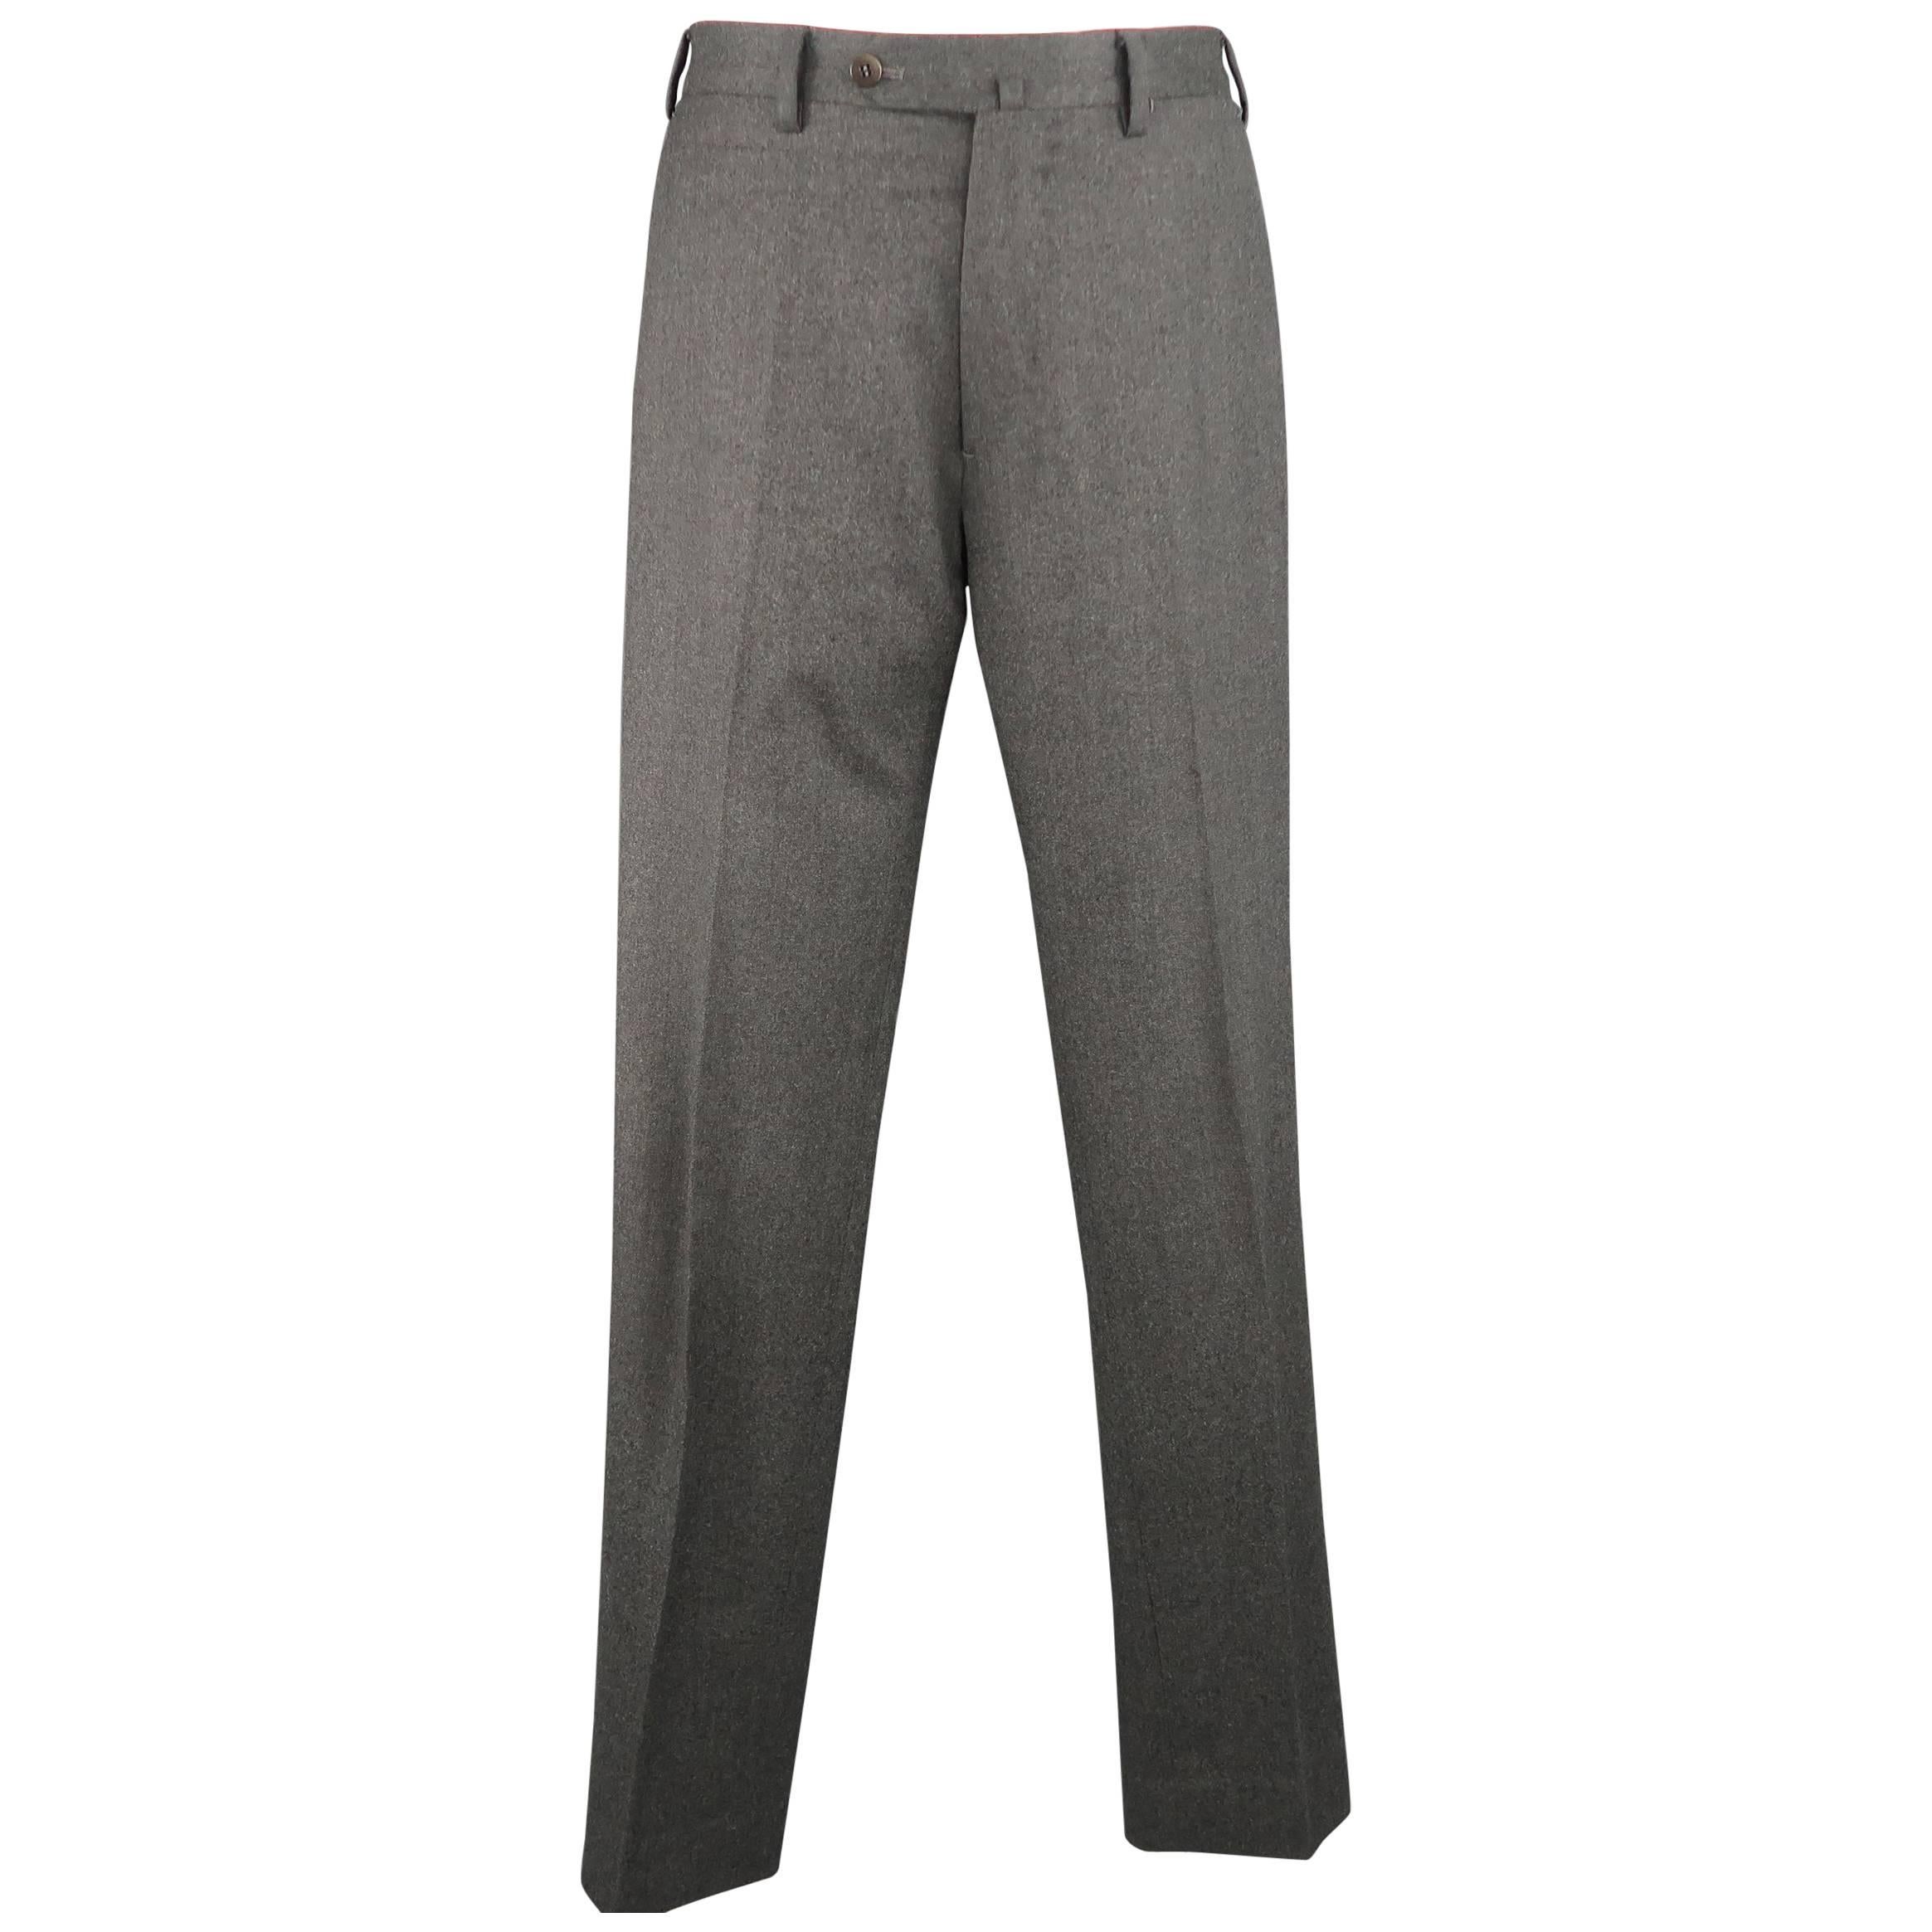 Men's BORRELLI Size 32 Dark Gray Solid Wool Flat Front Dress Pants